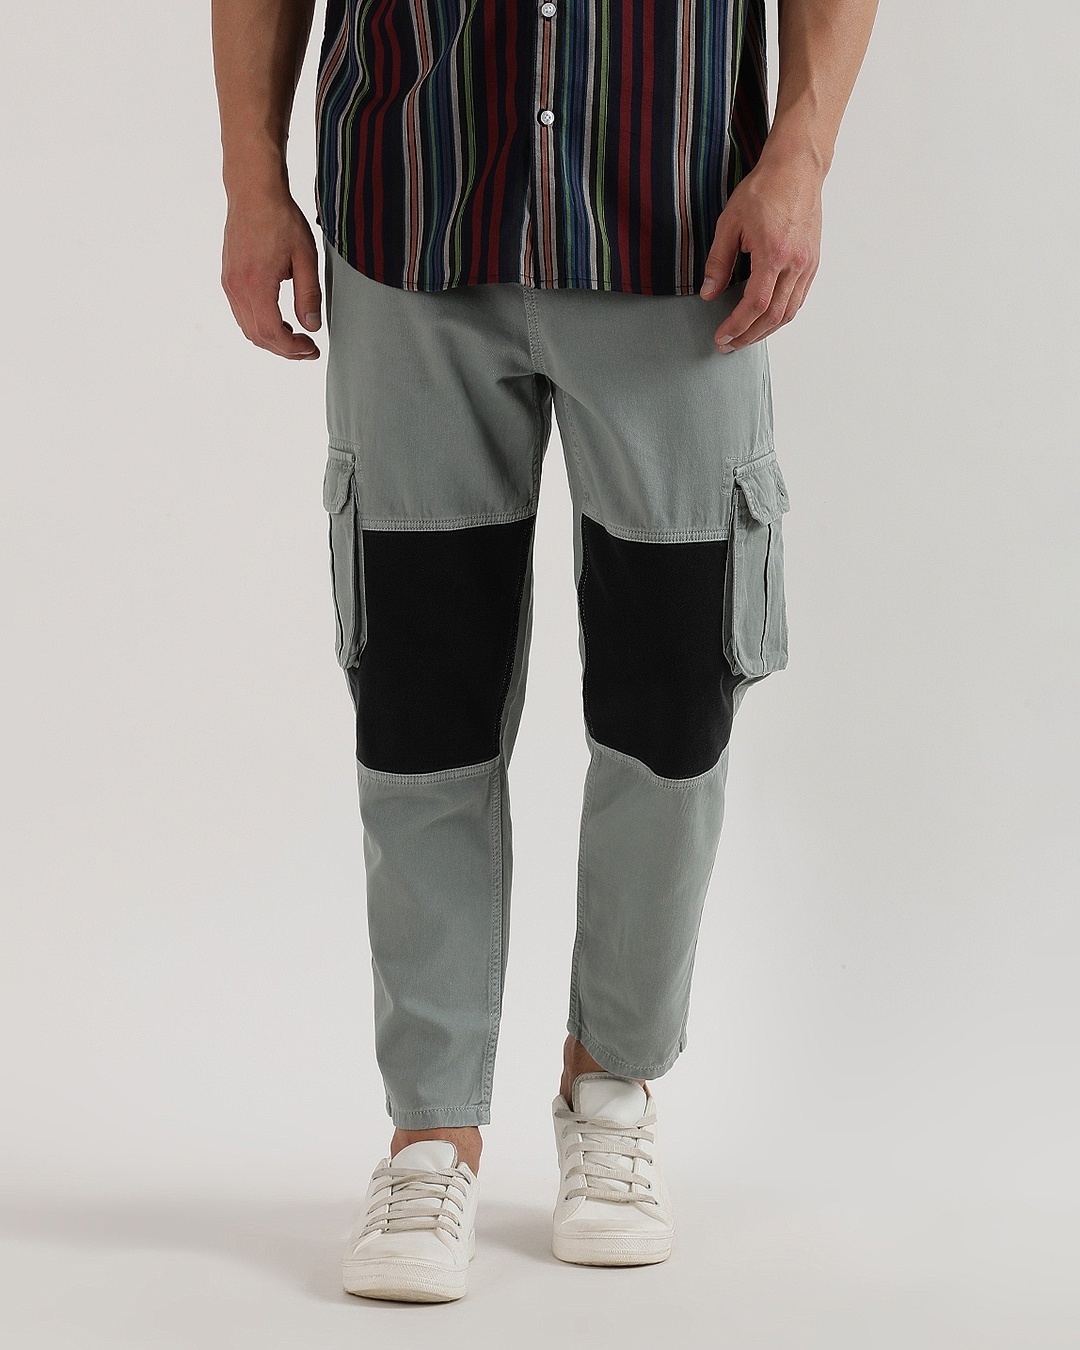 ADAGRO Mens Trousers Men Letter Patched Cargo Pants (Color : Coffee Brown,  Size : Large) : Amazon.com.au: Clothing, Shoes & Accessories